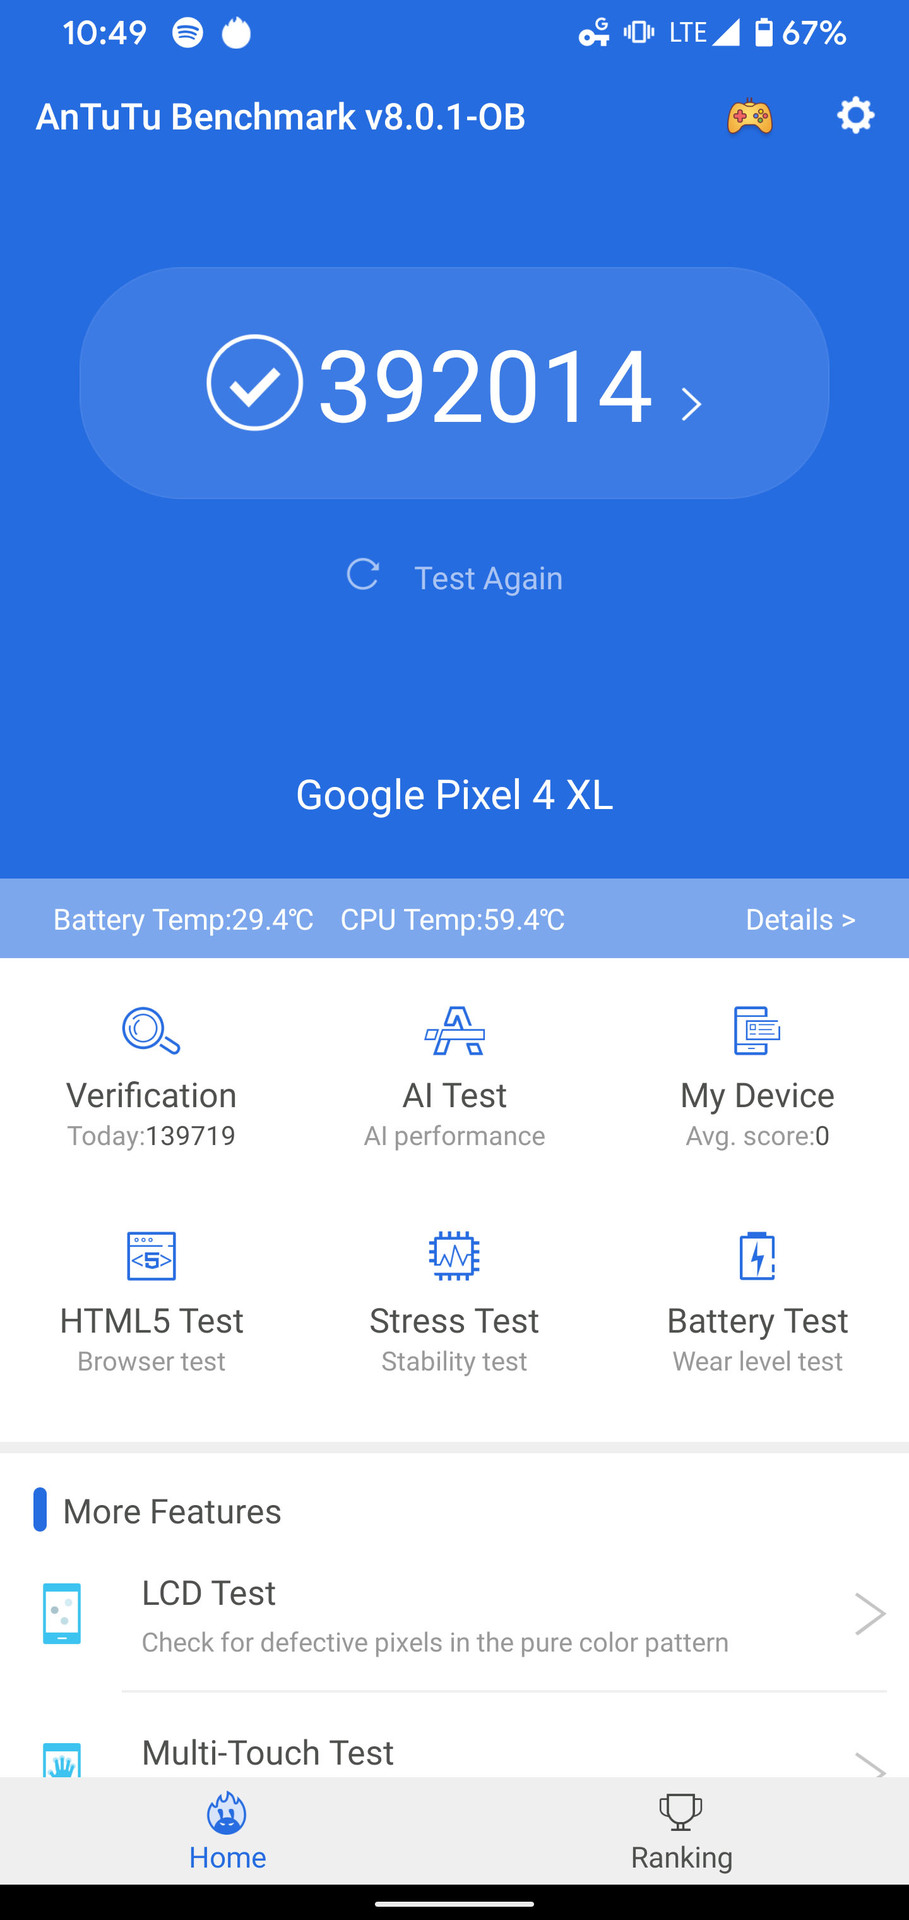 Google Pixel 4 XL AnTuTu benchmark results